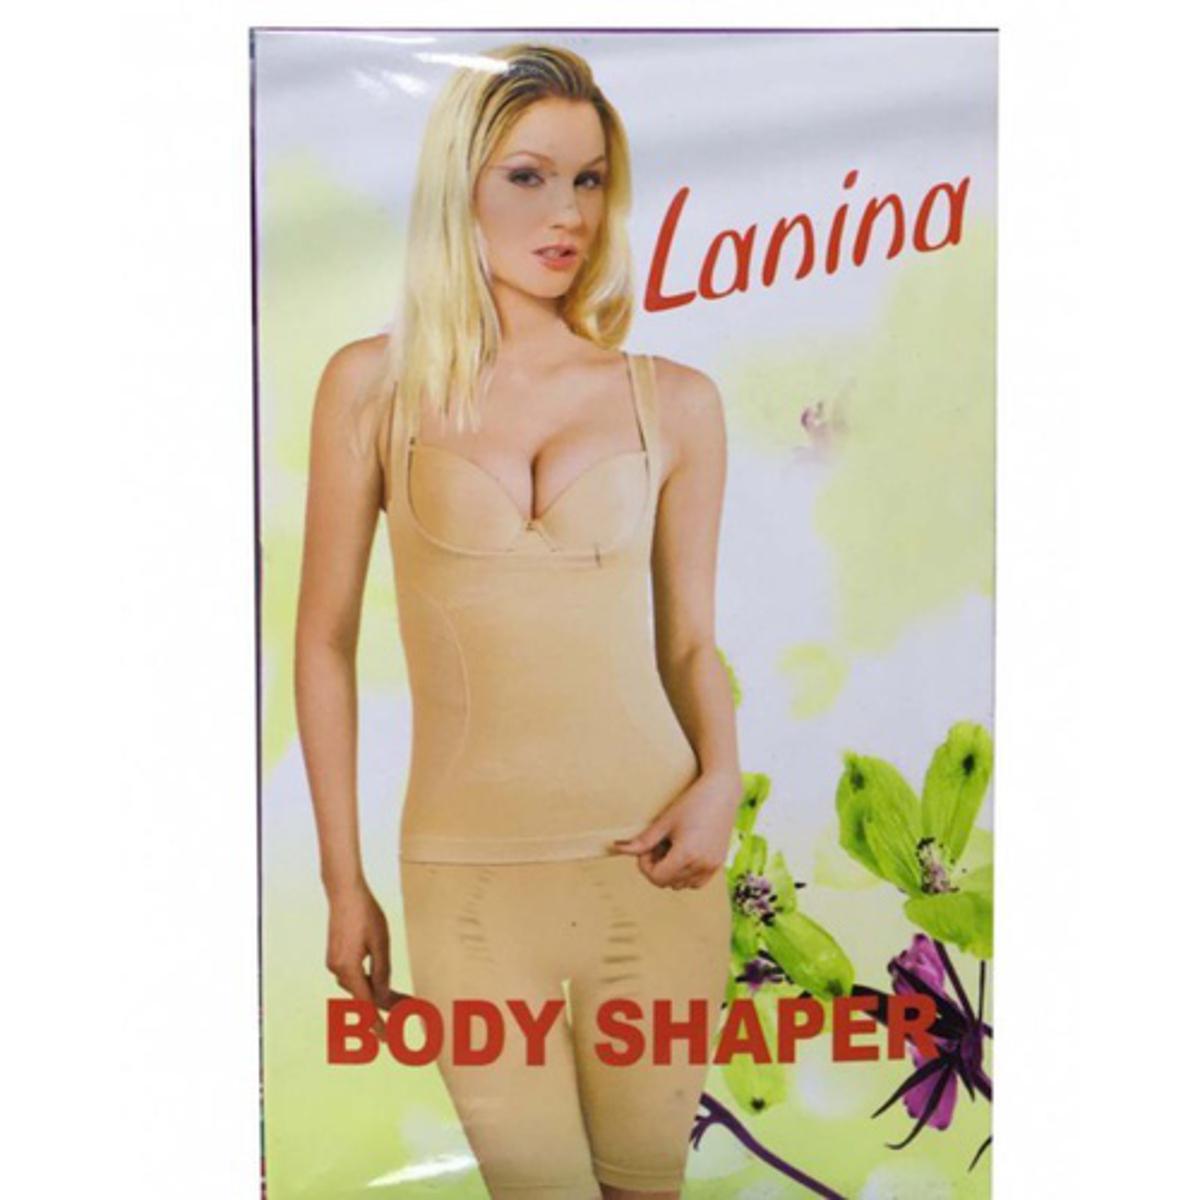 Lanina Full Body Shaper - Secret Body Shaper